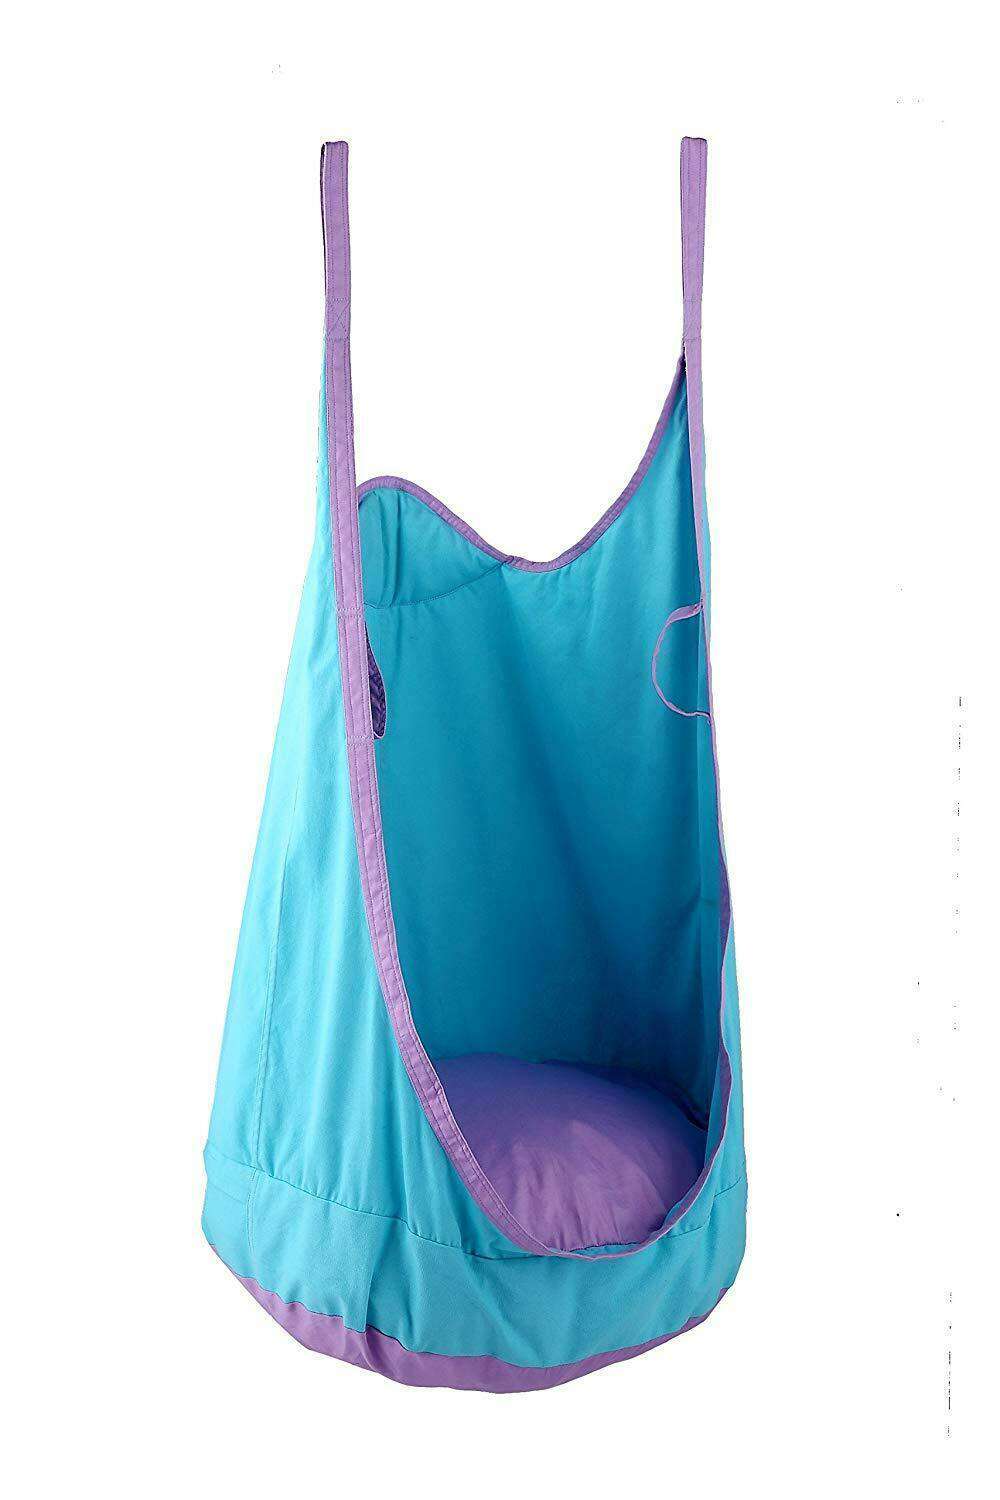 large kids swing hammock pod chair rope hanging seat nest indoor outdoor